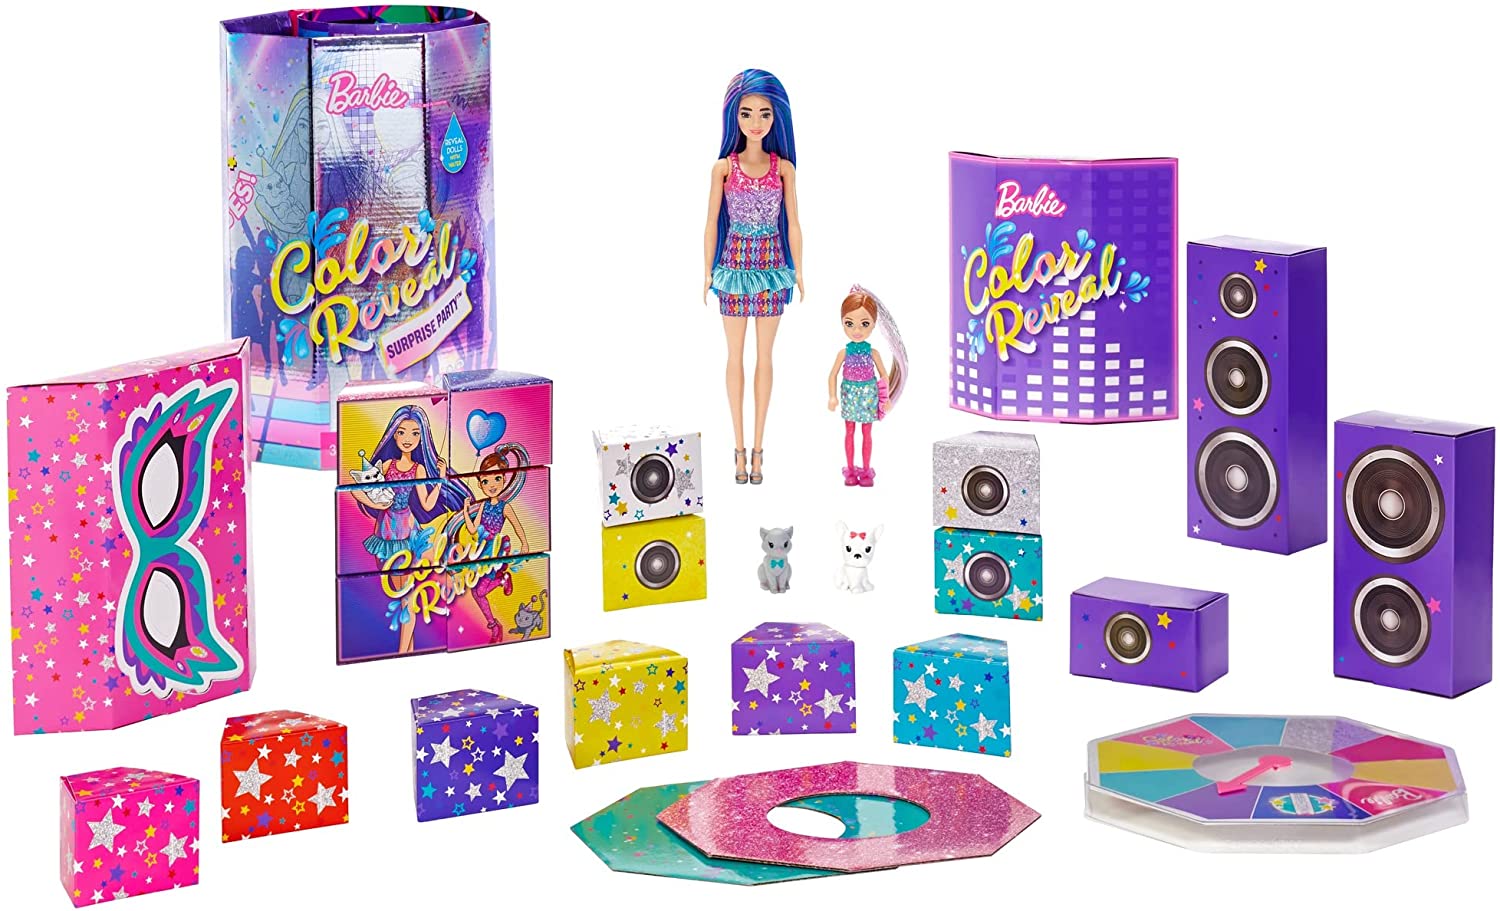 Barbie Color Reveal Surprise Party Set w/ 50+ Surprises $24.99 + Free Shipping w/ Amazon Prime or Orders $25+